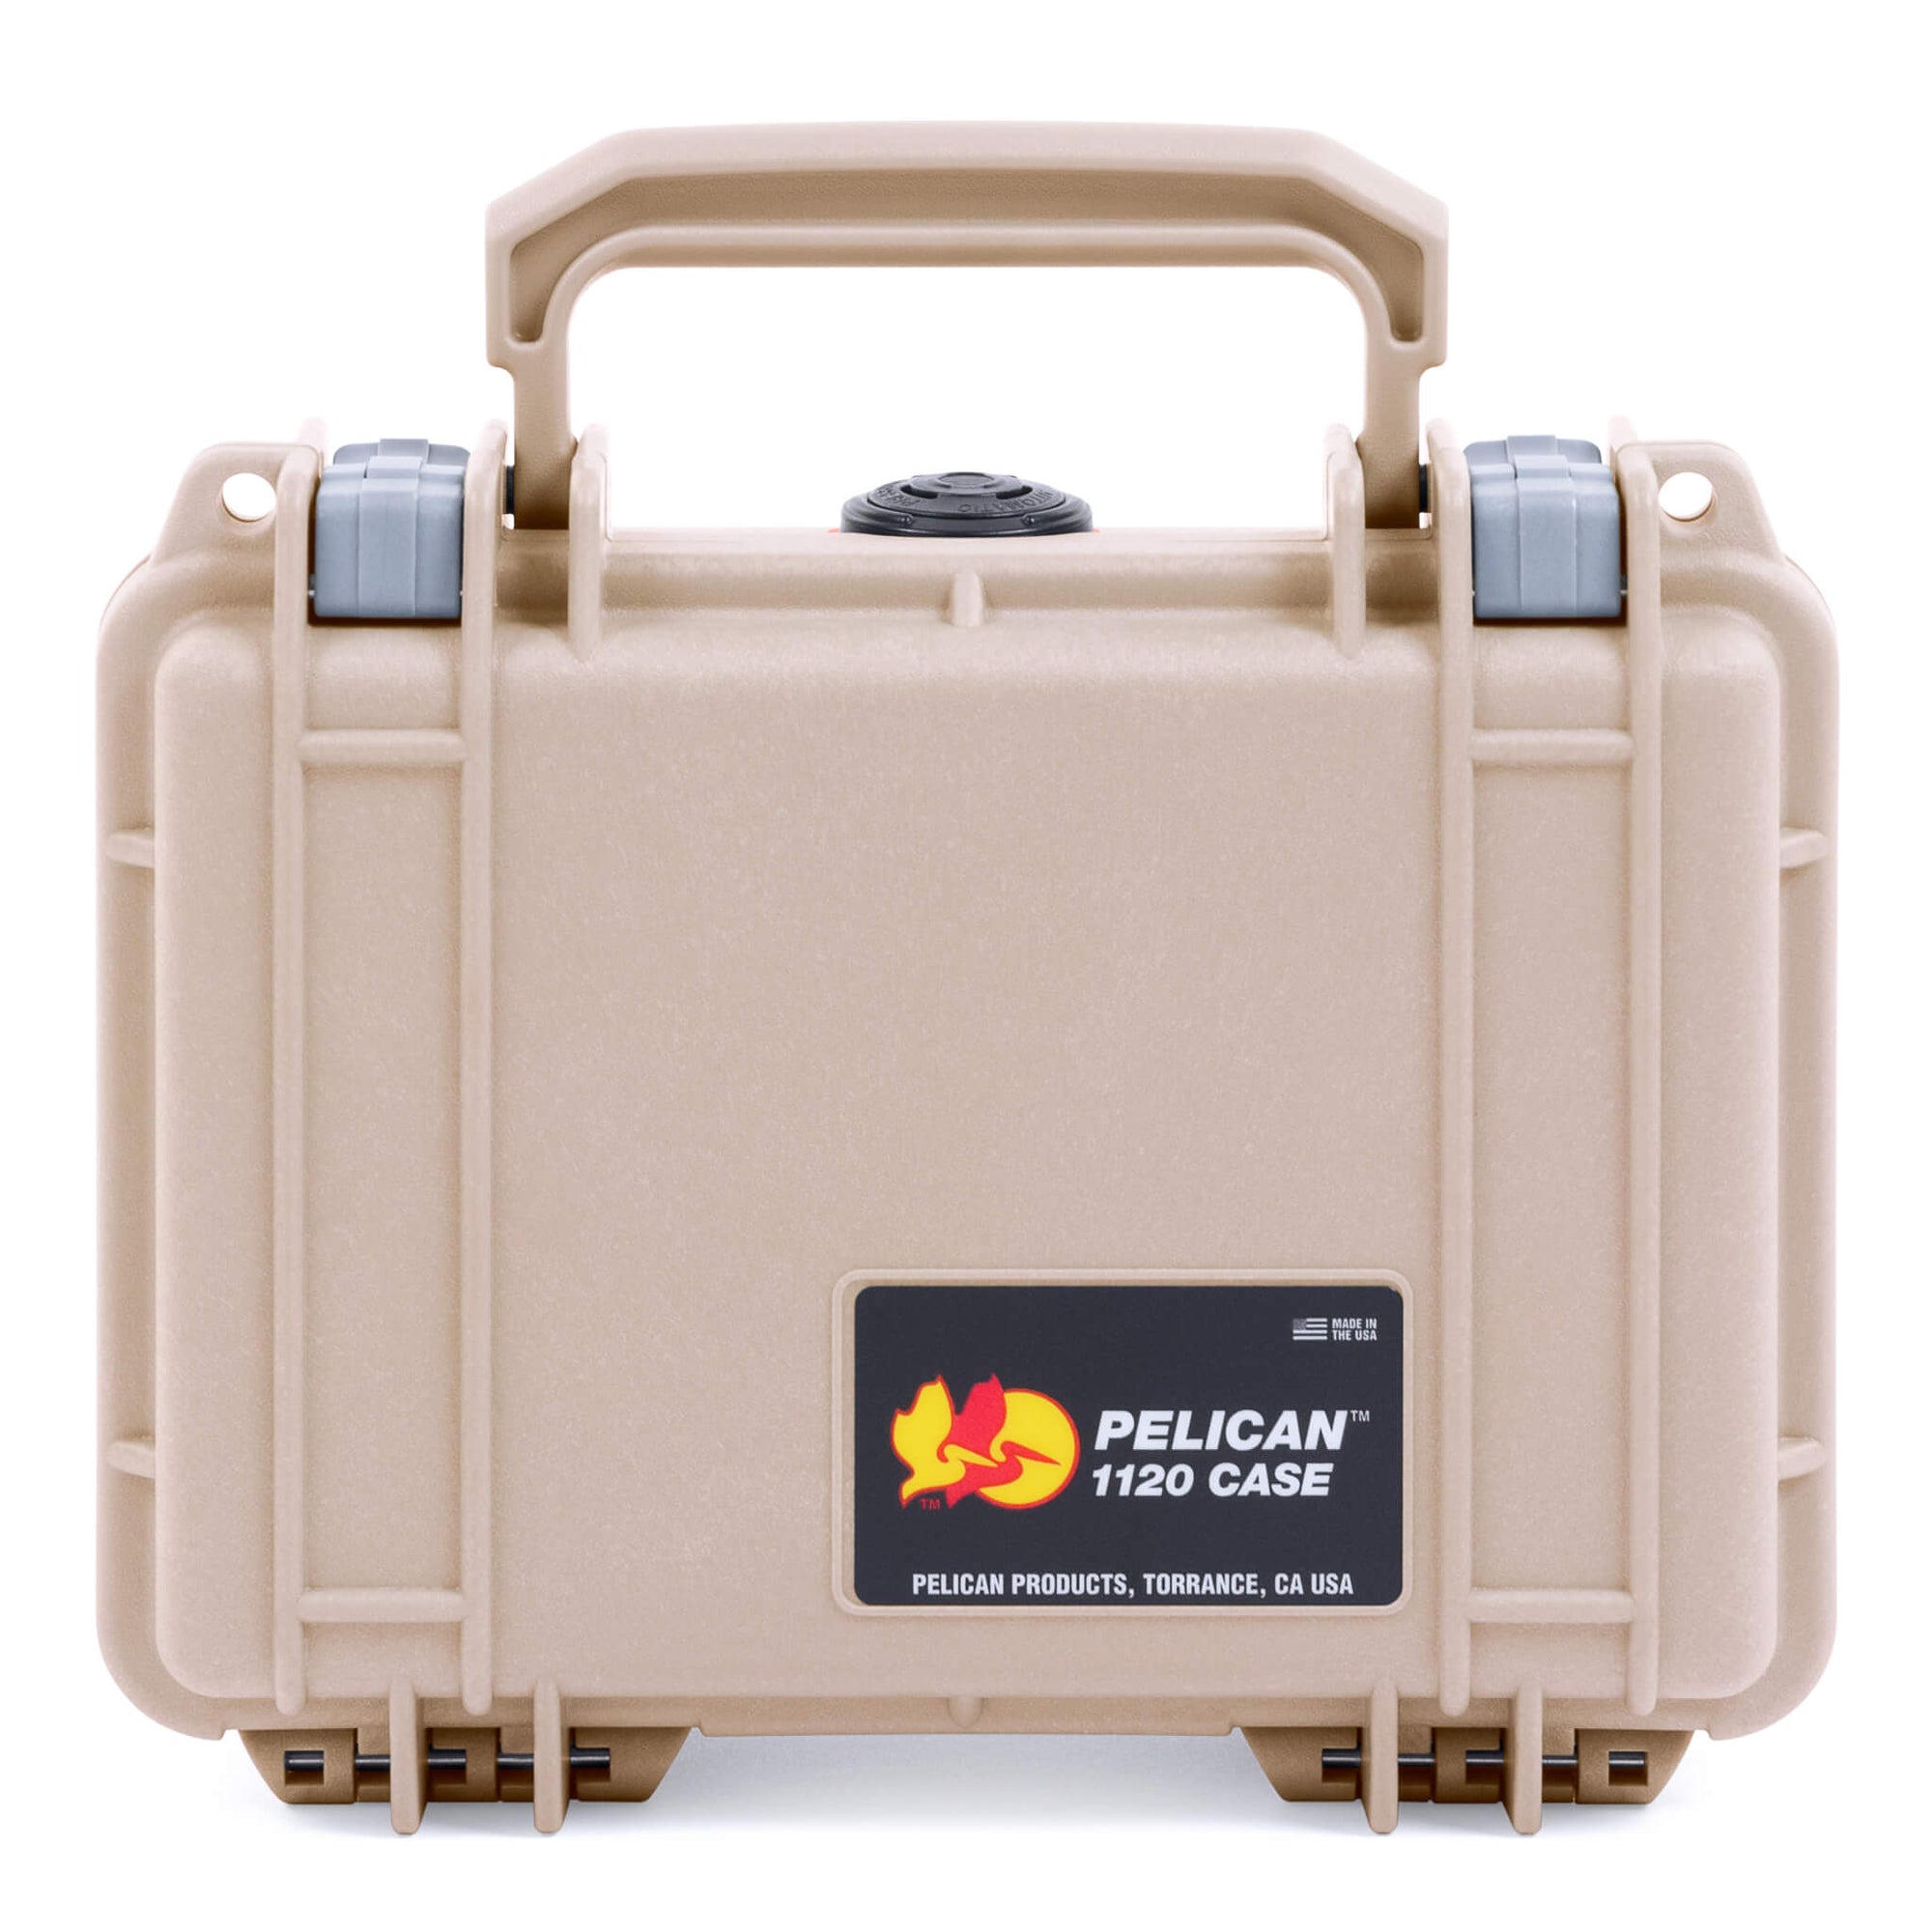 Pelican 1120 Case, Desert Tan with Silver Latches ColorCase 